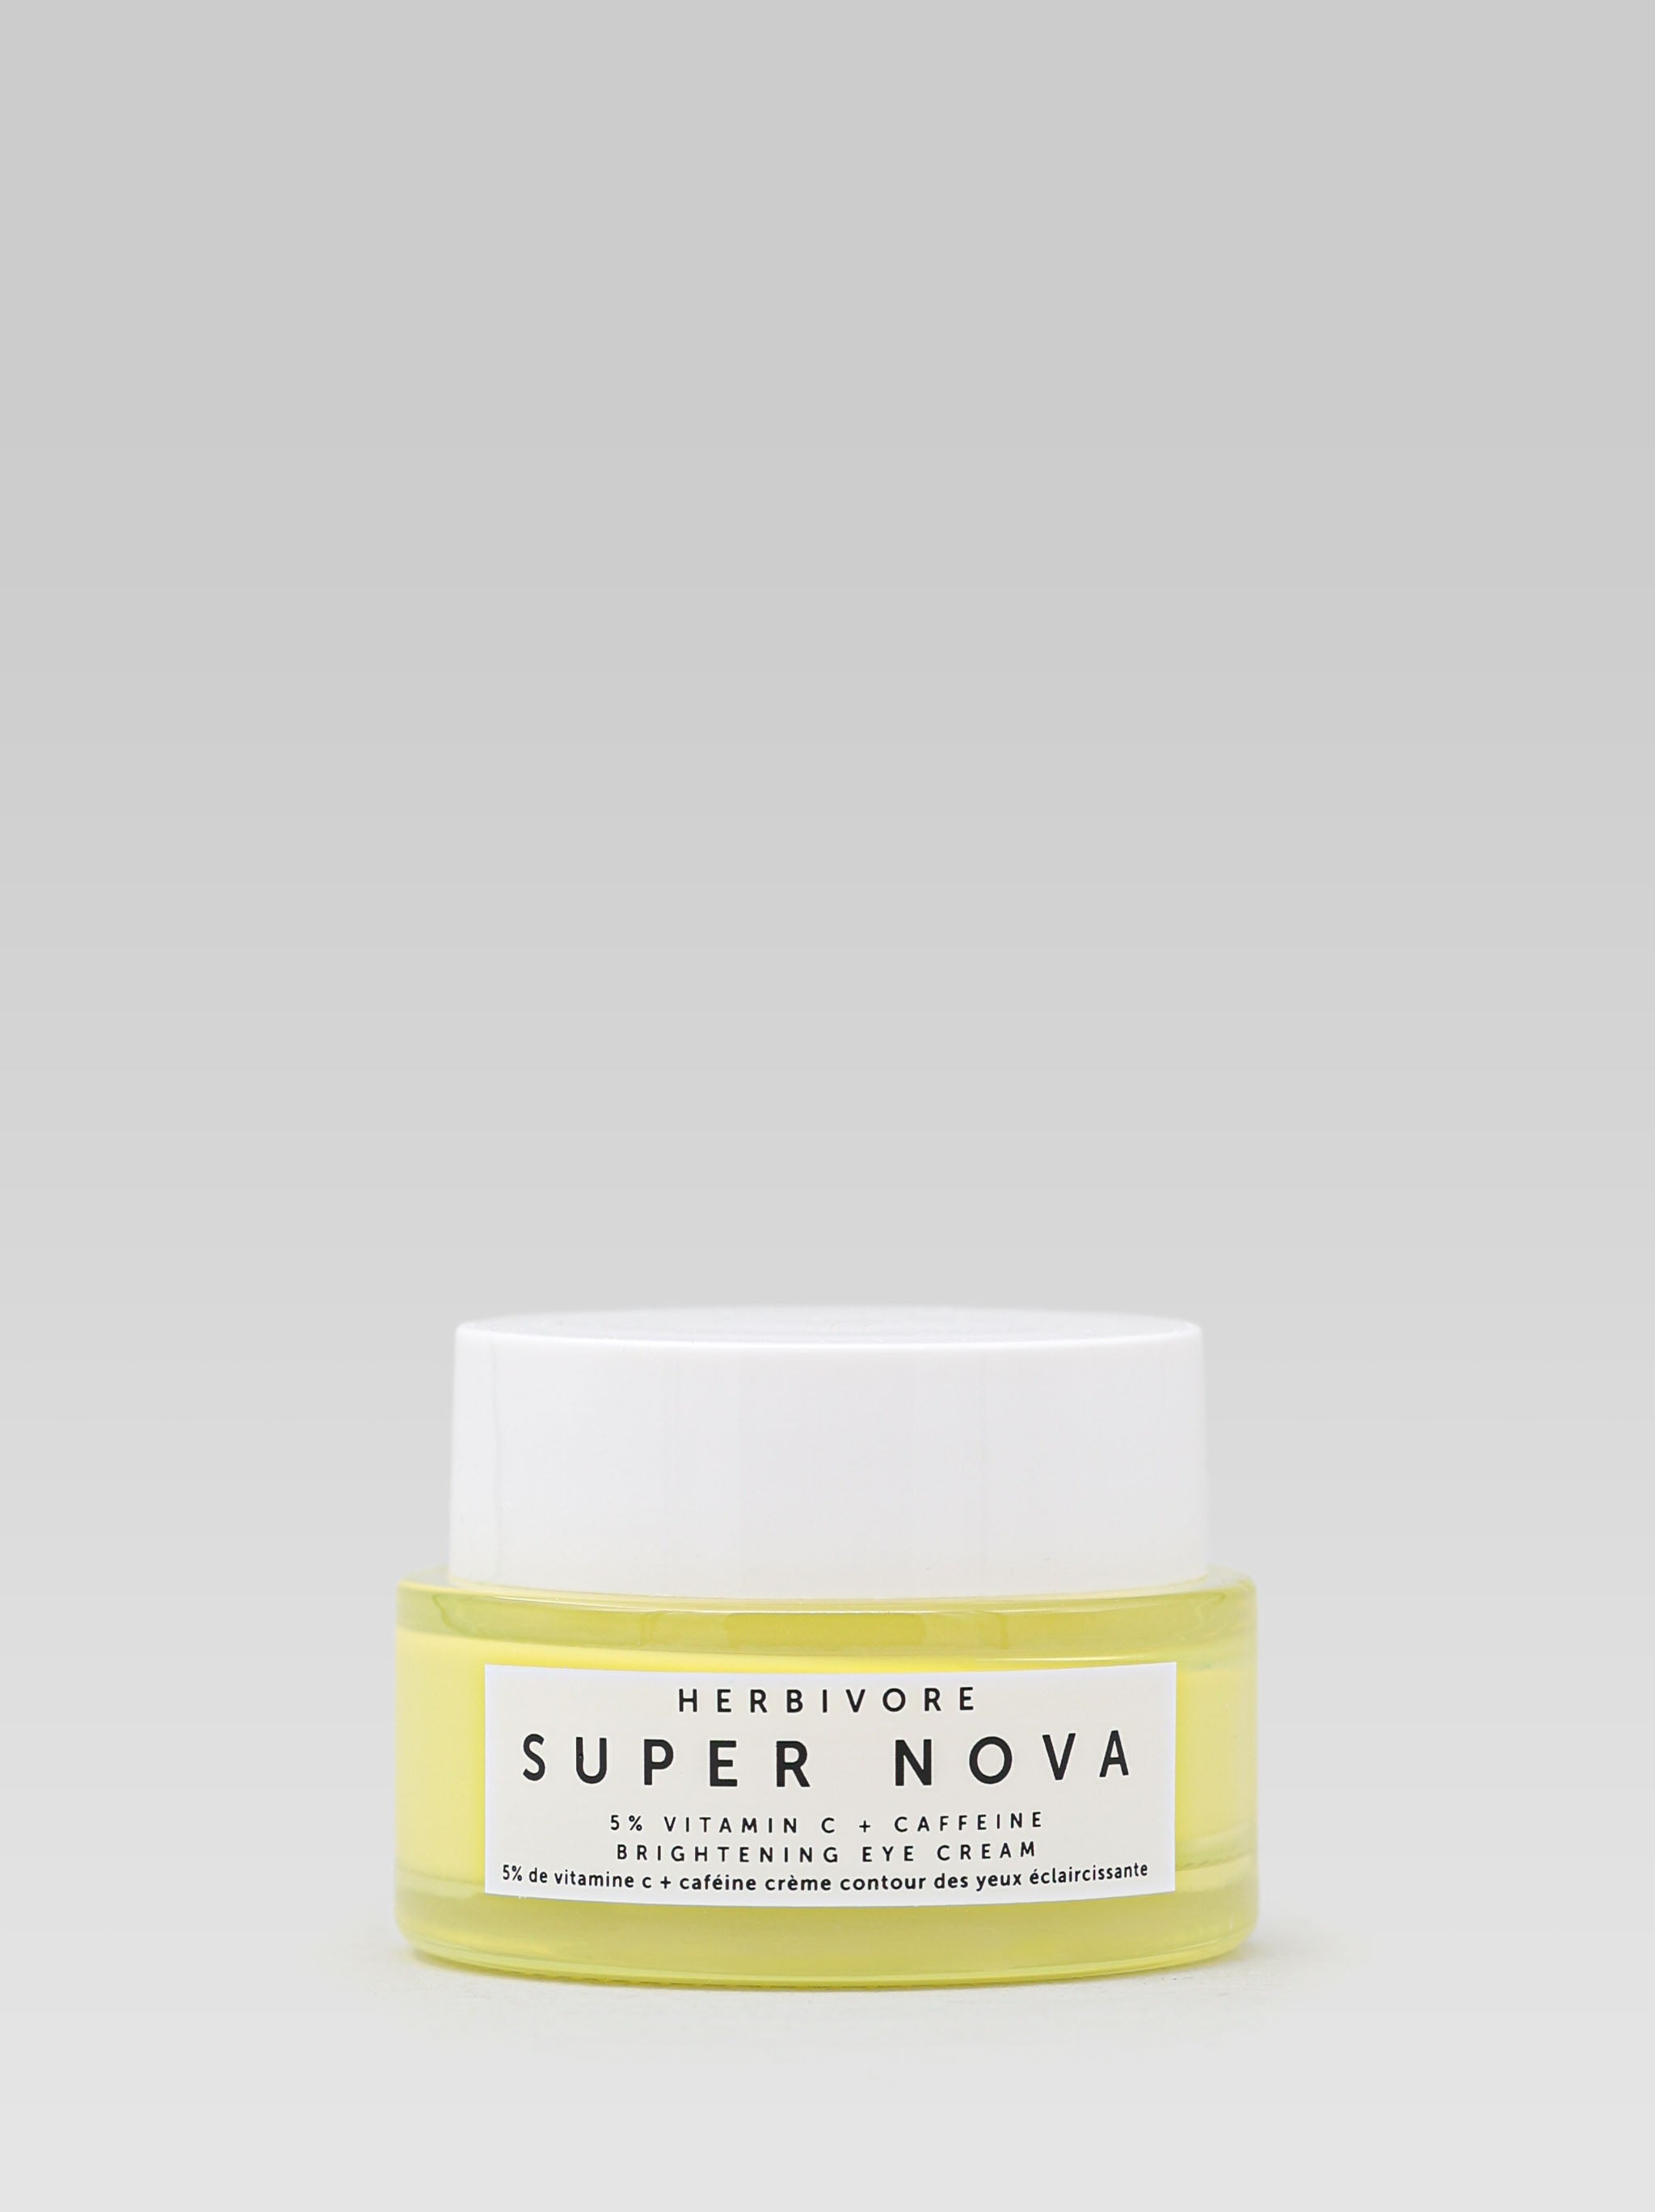 HERBIVORE BOTANICALS Super Nova Brightening Eye Cream Product Shot